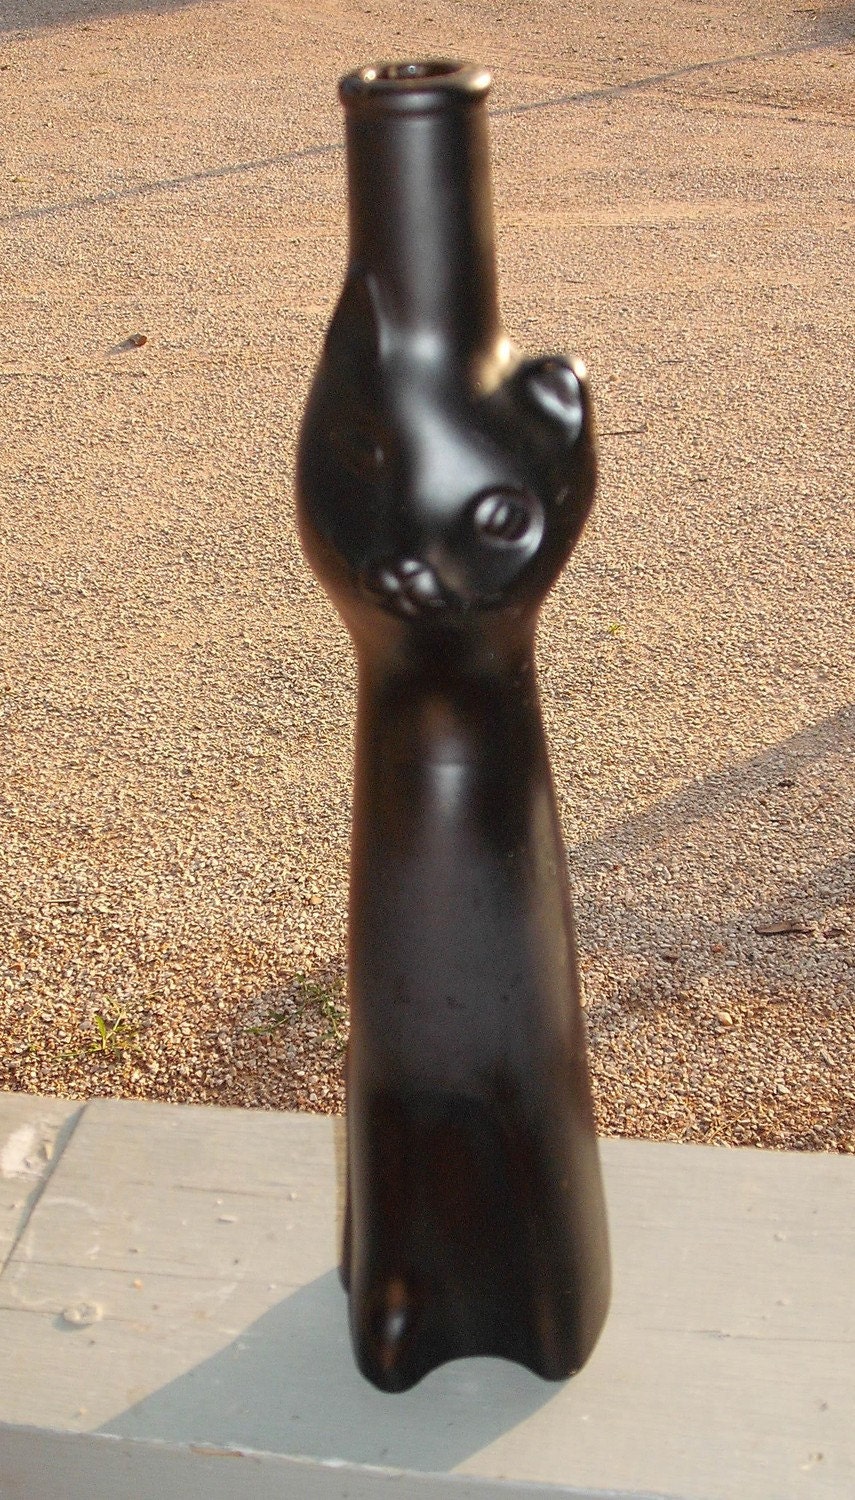 Black Cat Bud Vase Vintage German Wine Bottle by lasosantiques